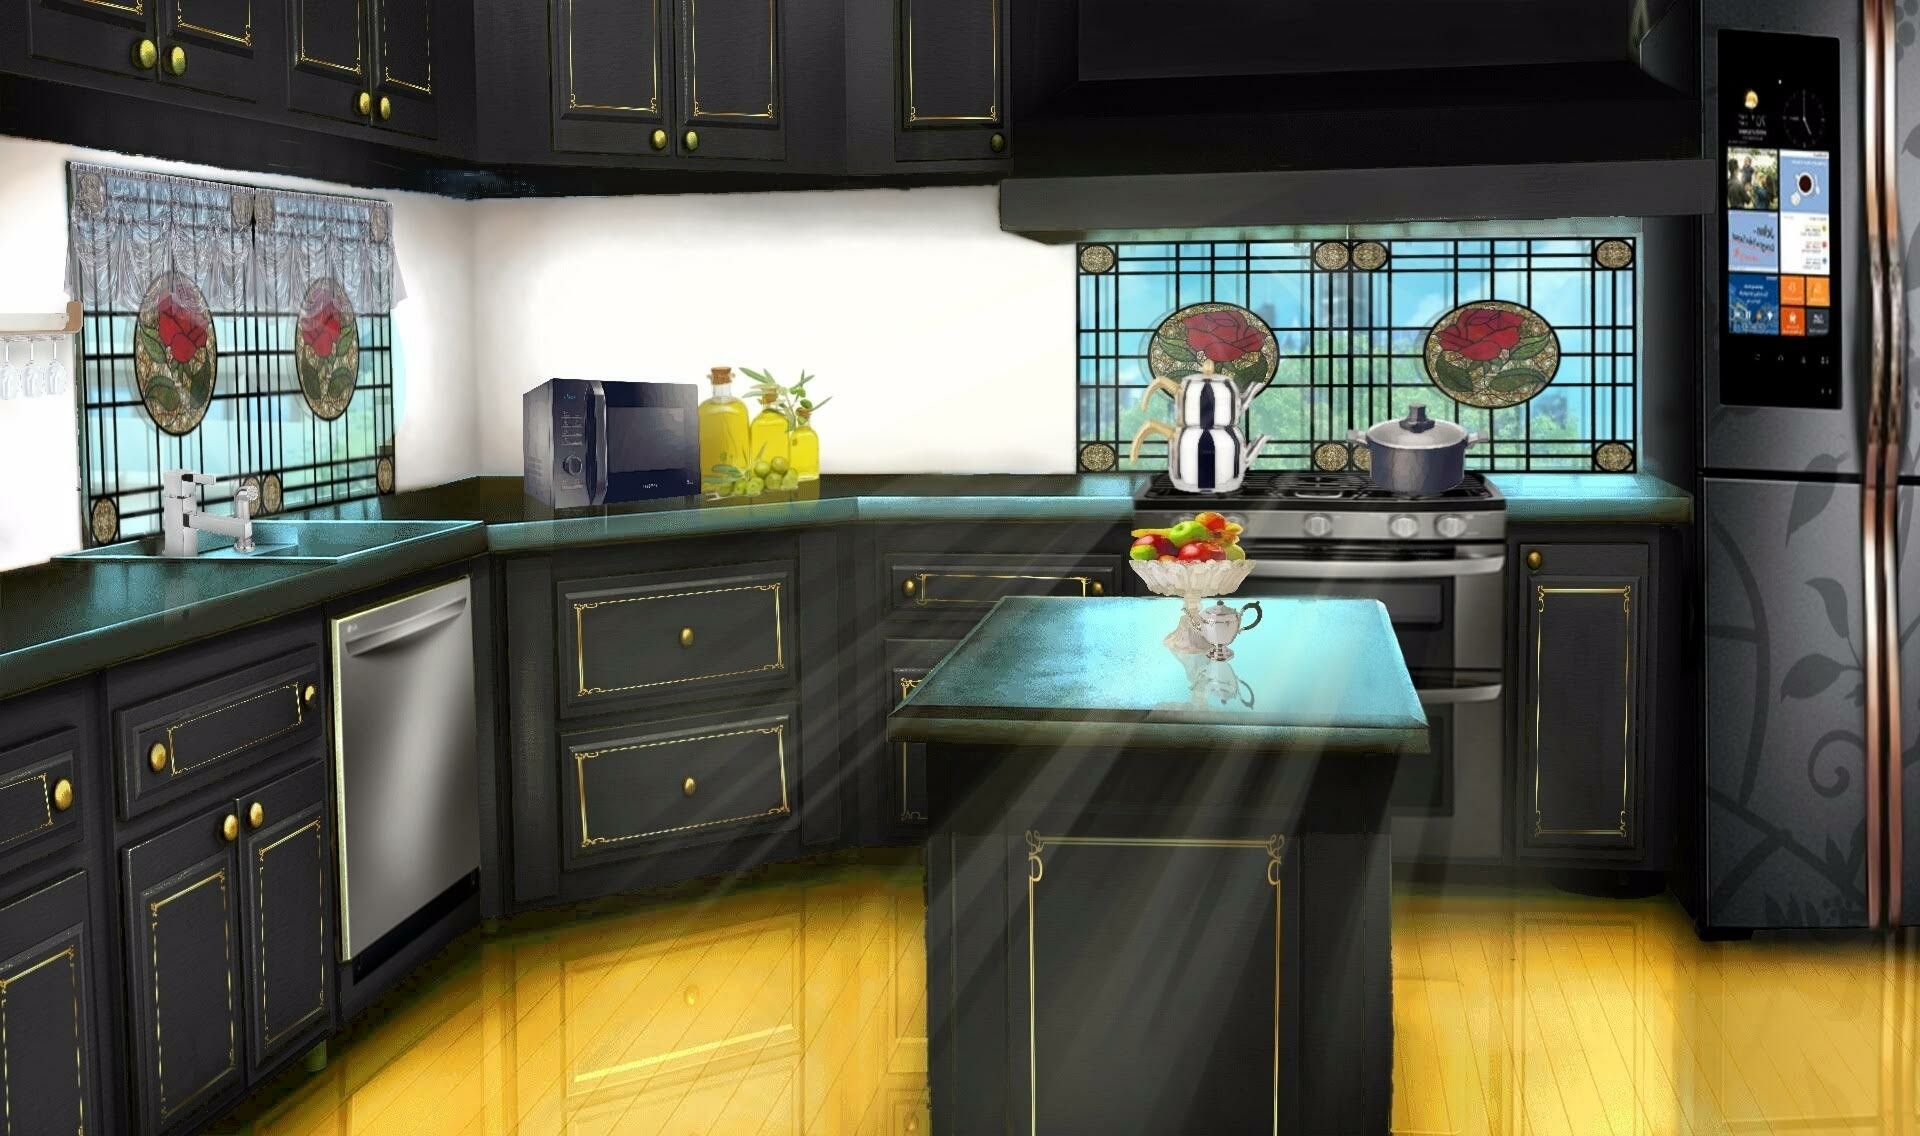 This was originally Episode Interactive's background called, INT. KITCHEN CLASSIC LUXURY -. Kitchen background, Episode interactive background, Anime background